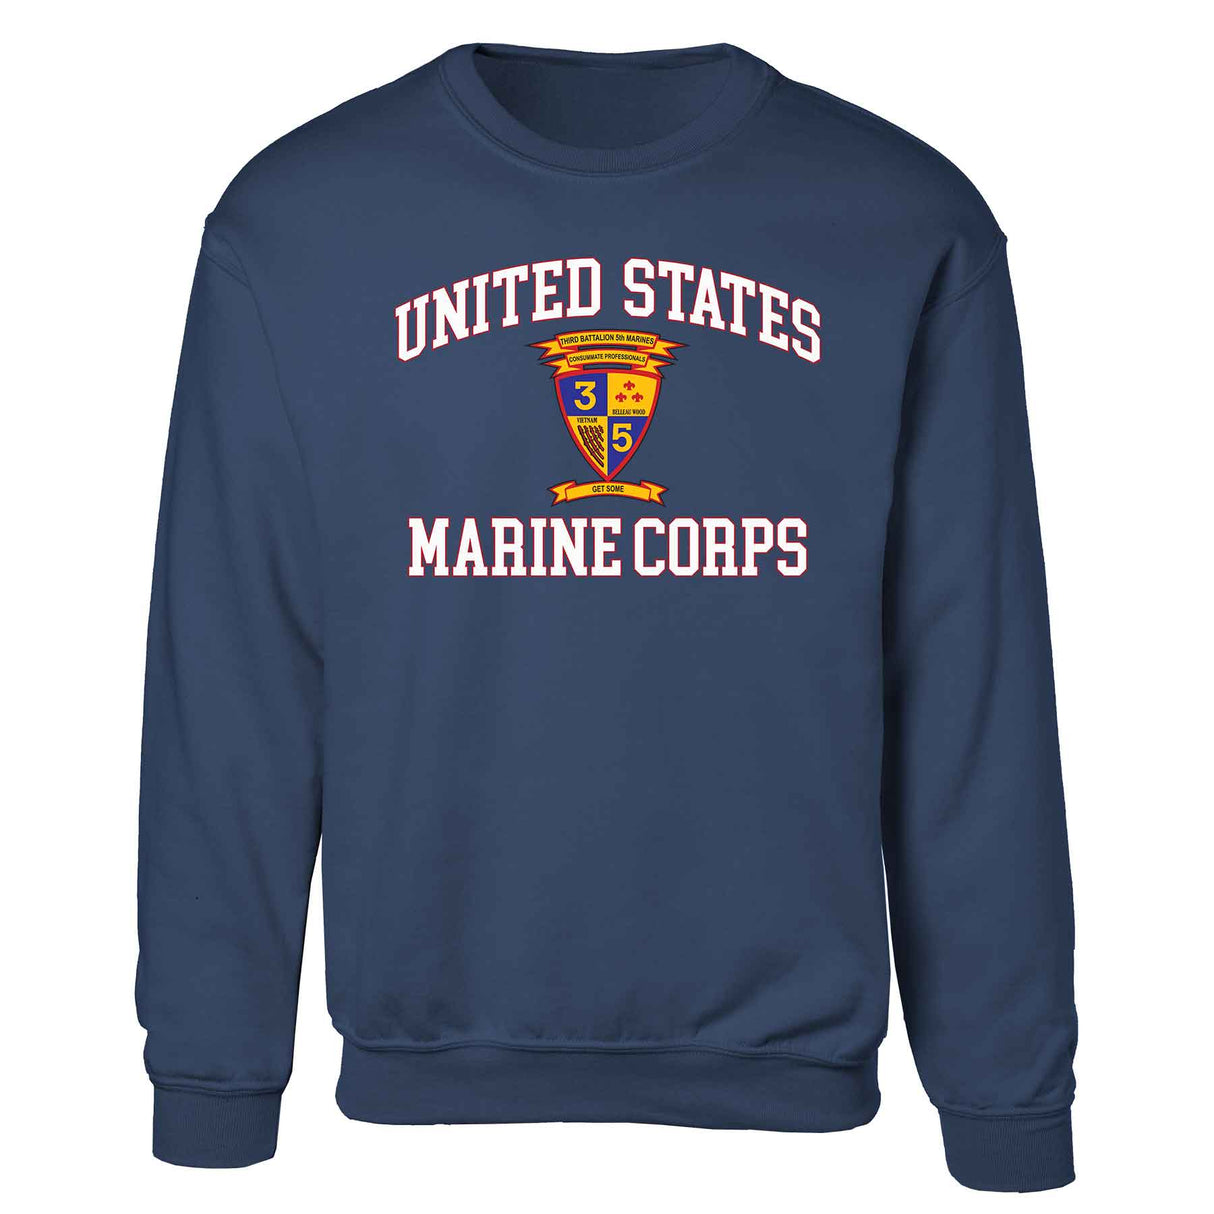 3rd Battalion 5th Marines USMC Sweatshirt - SGT GRIT